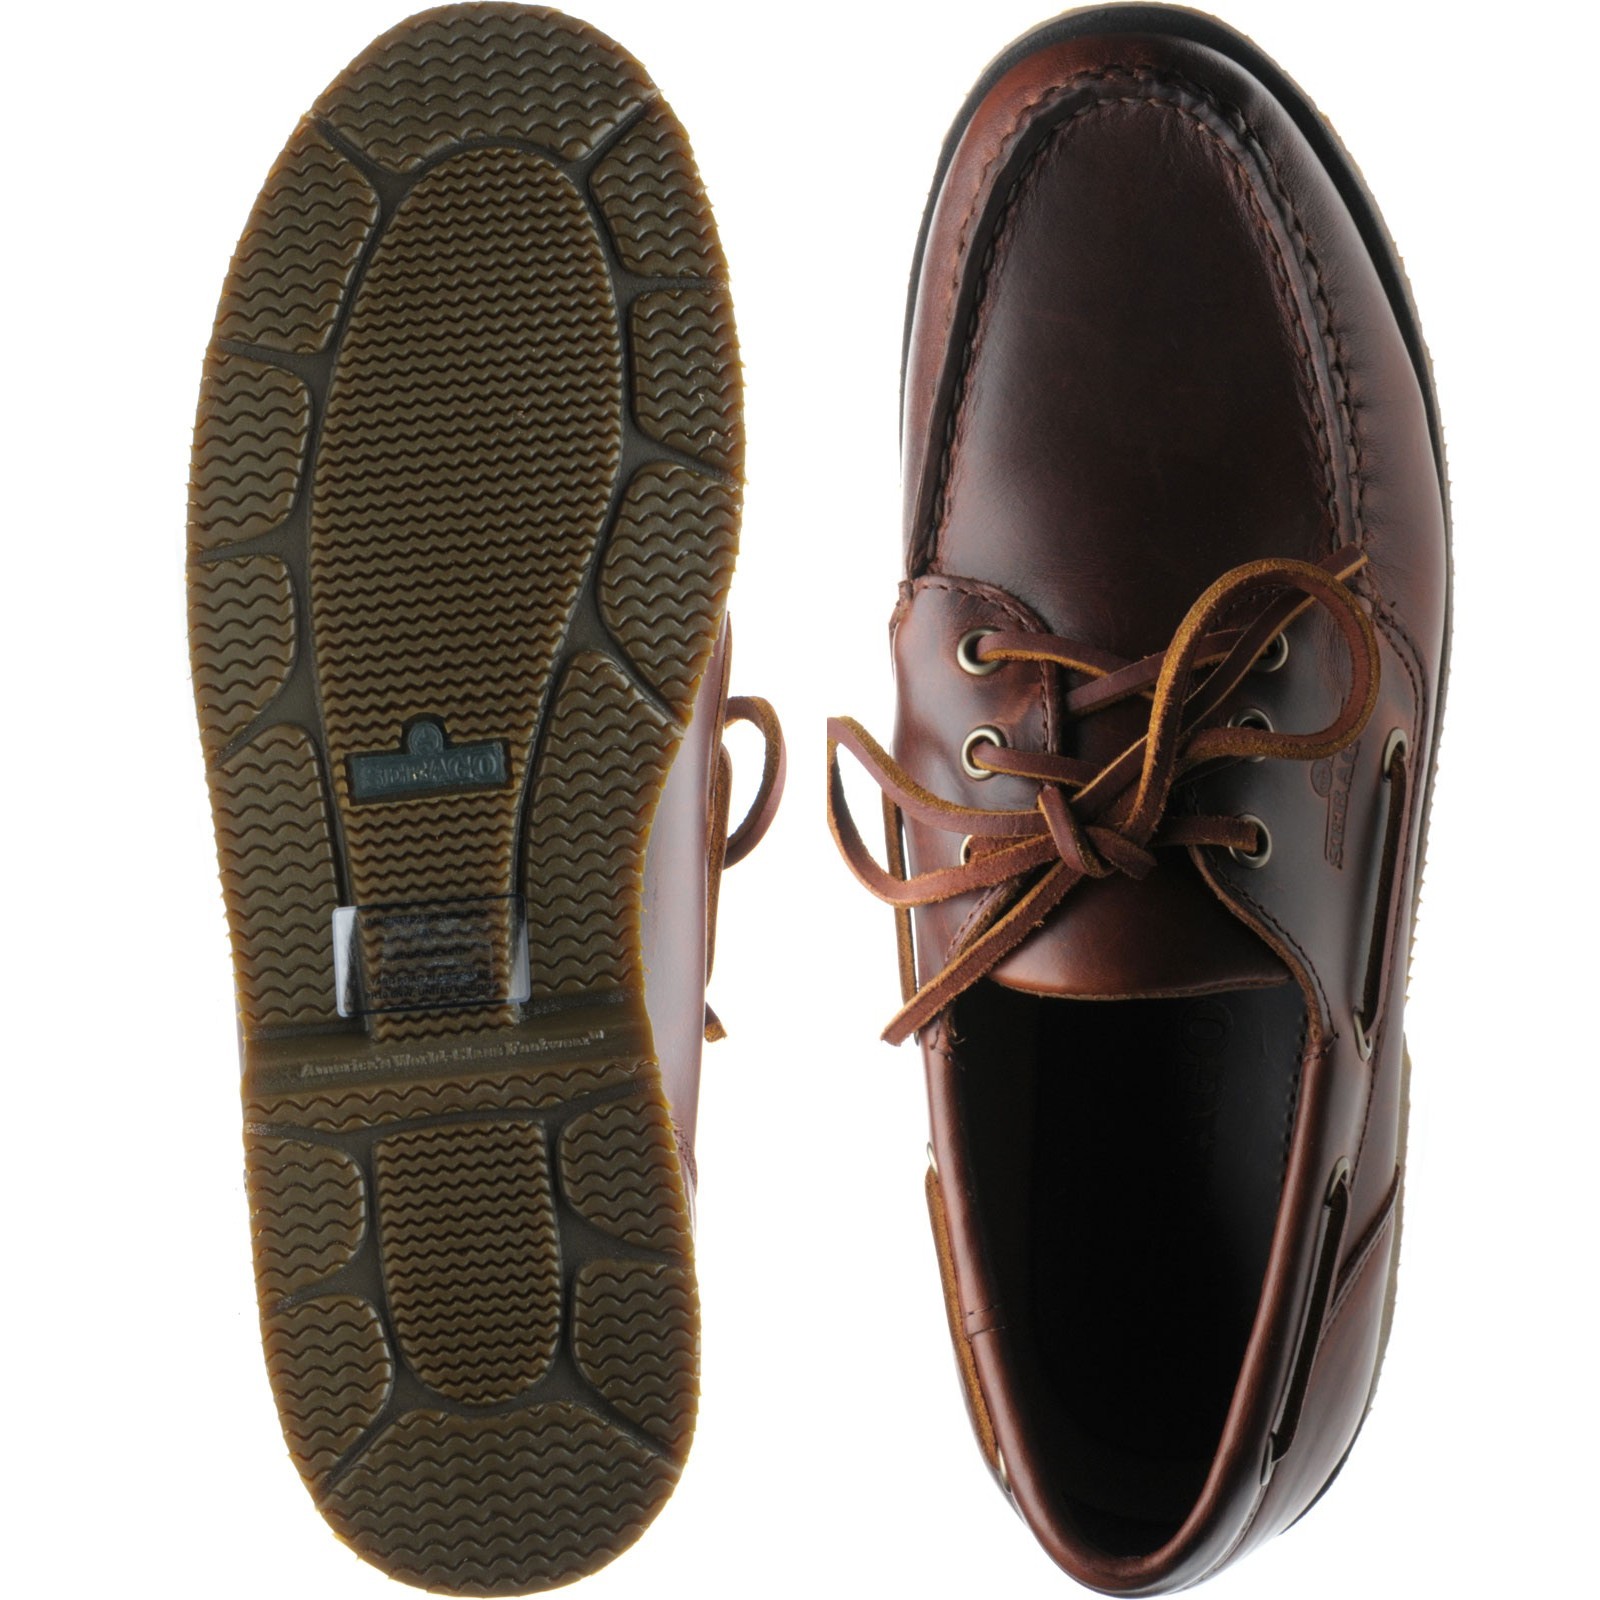 Sebago shoes | Sebago Sale | Foresider in Brown-Gum at Herring Shoes